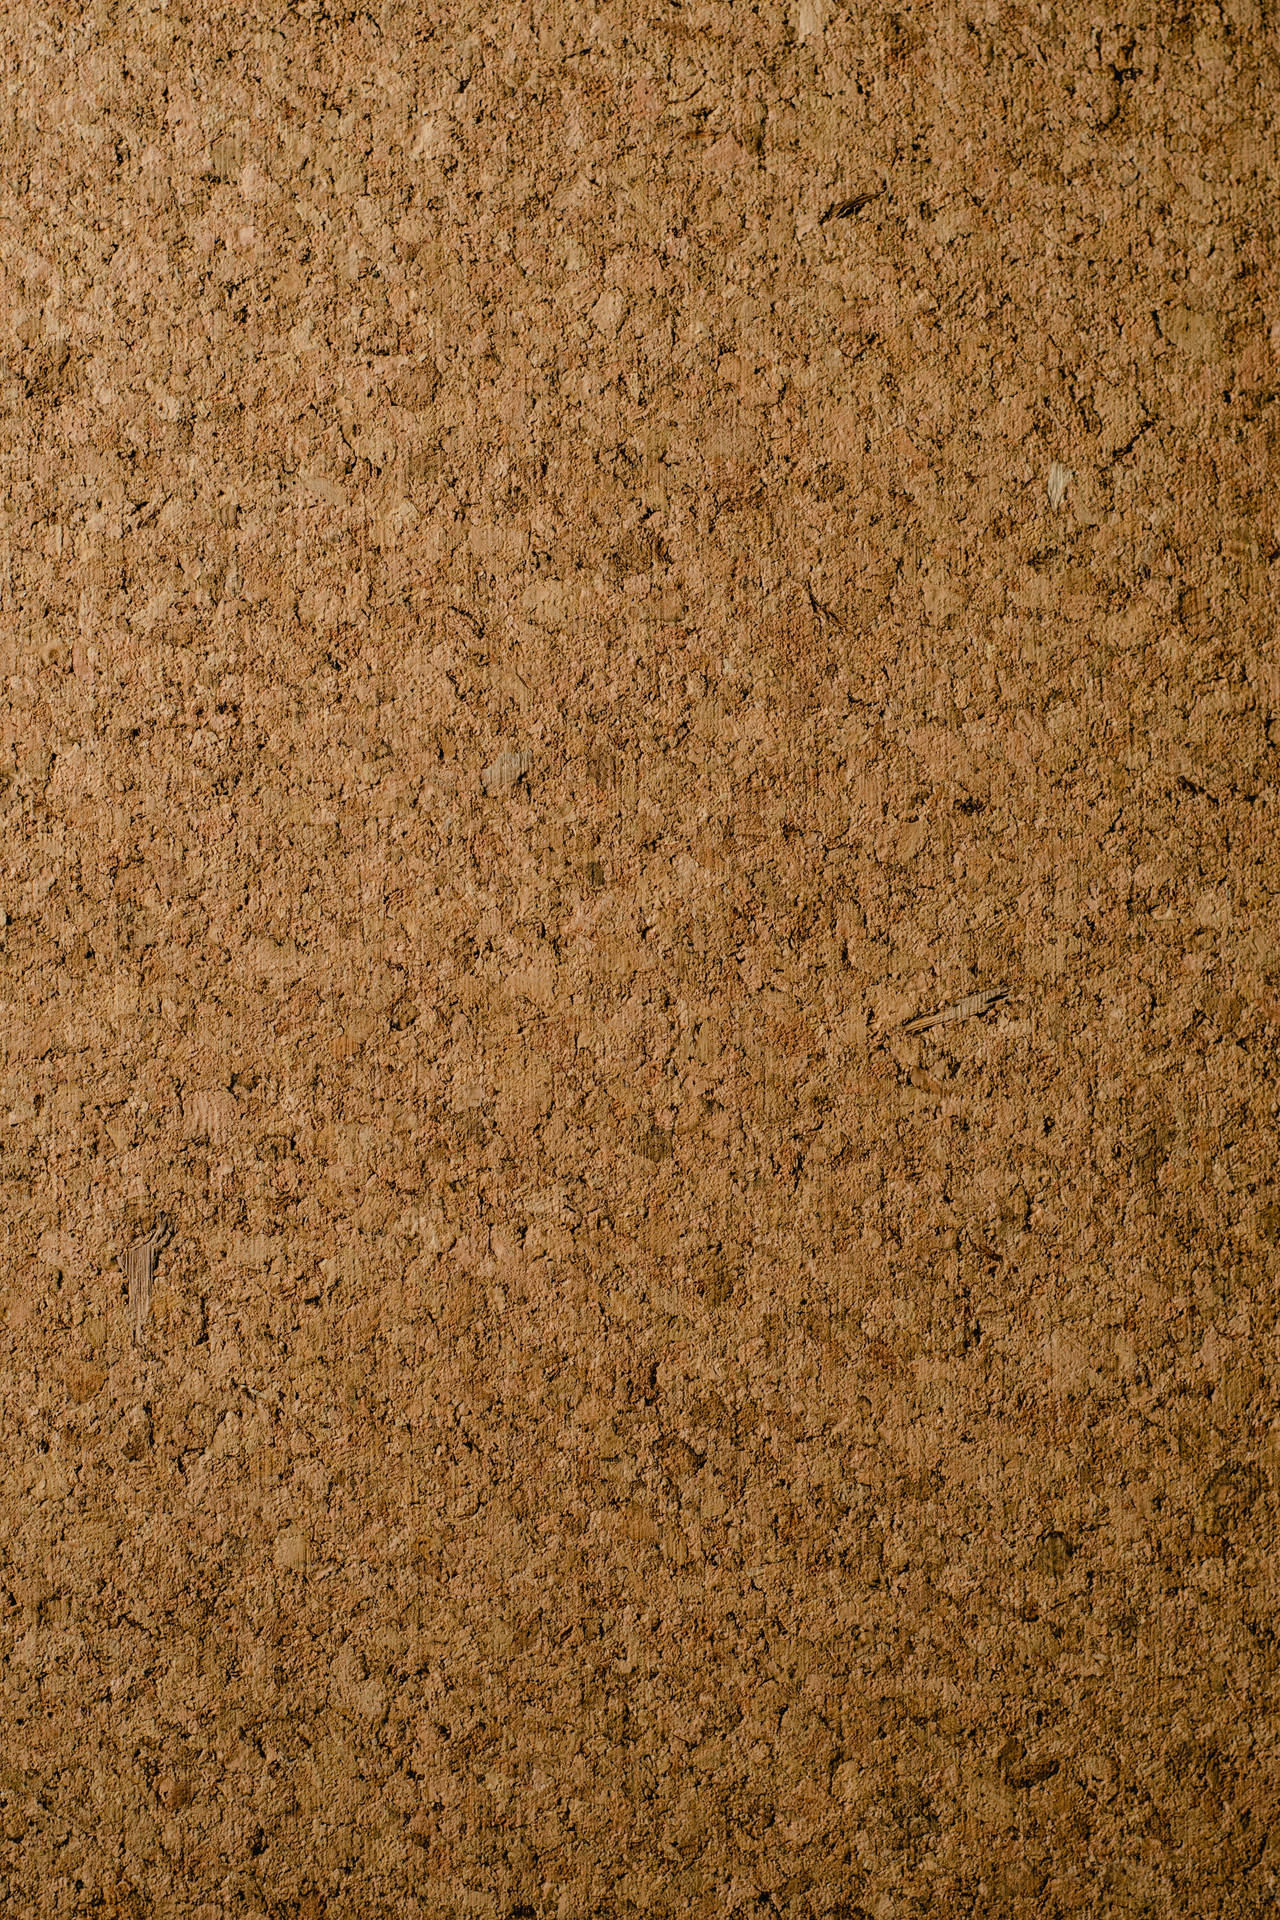 Brown Textured Corkboard Surface Wallpaper